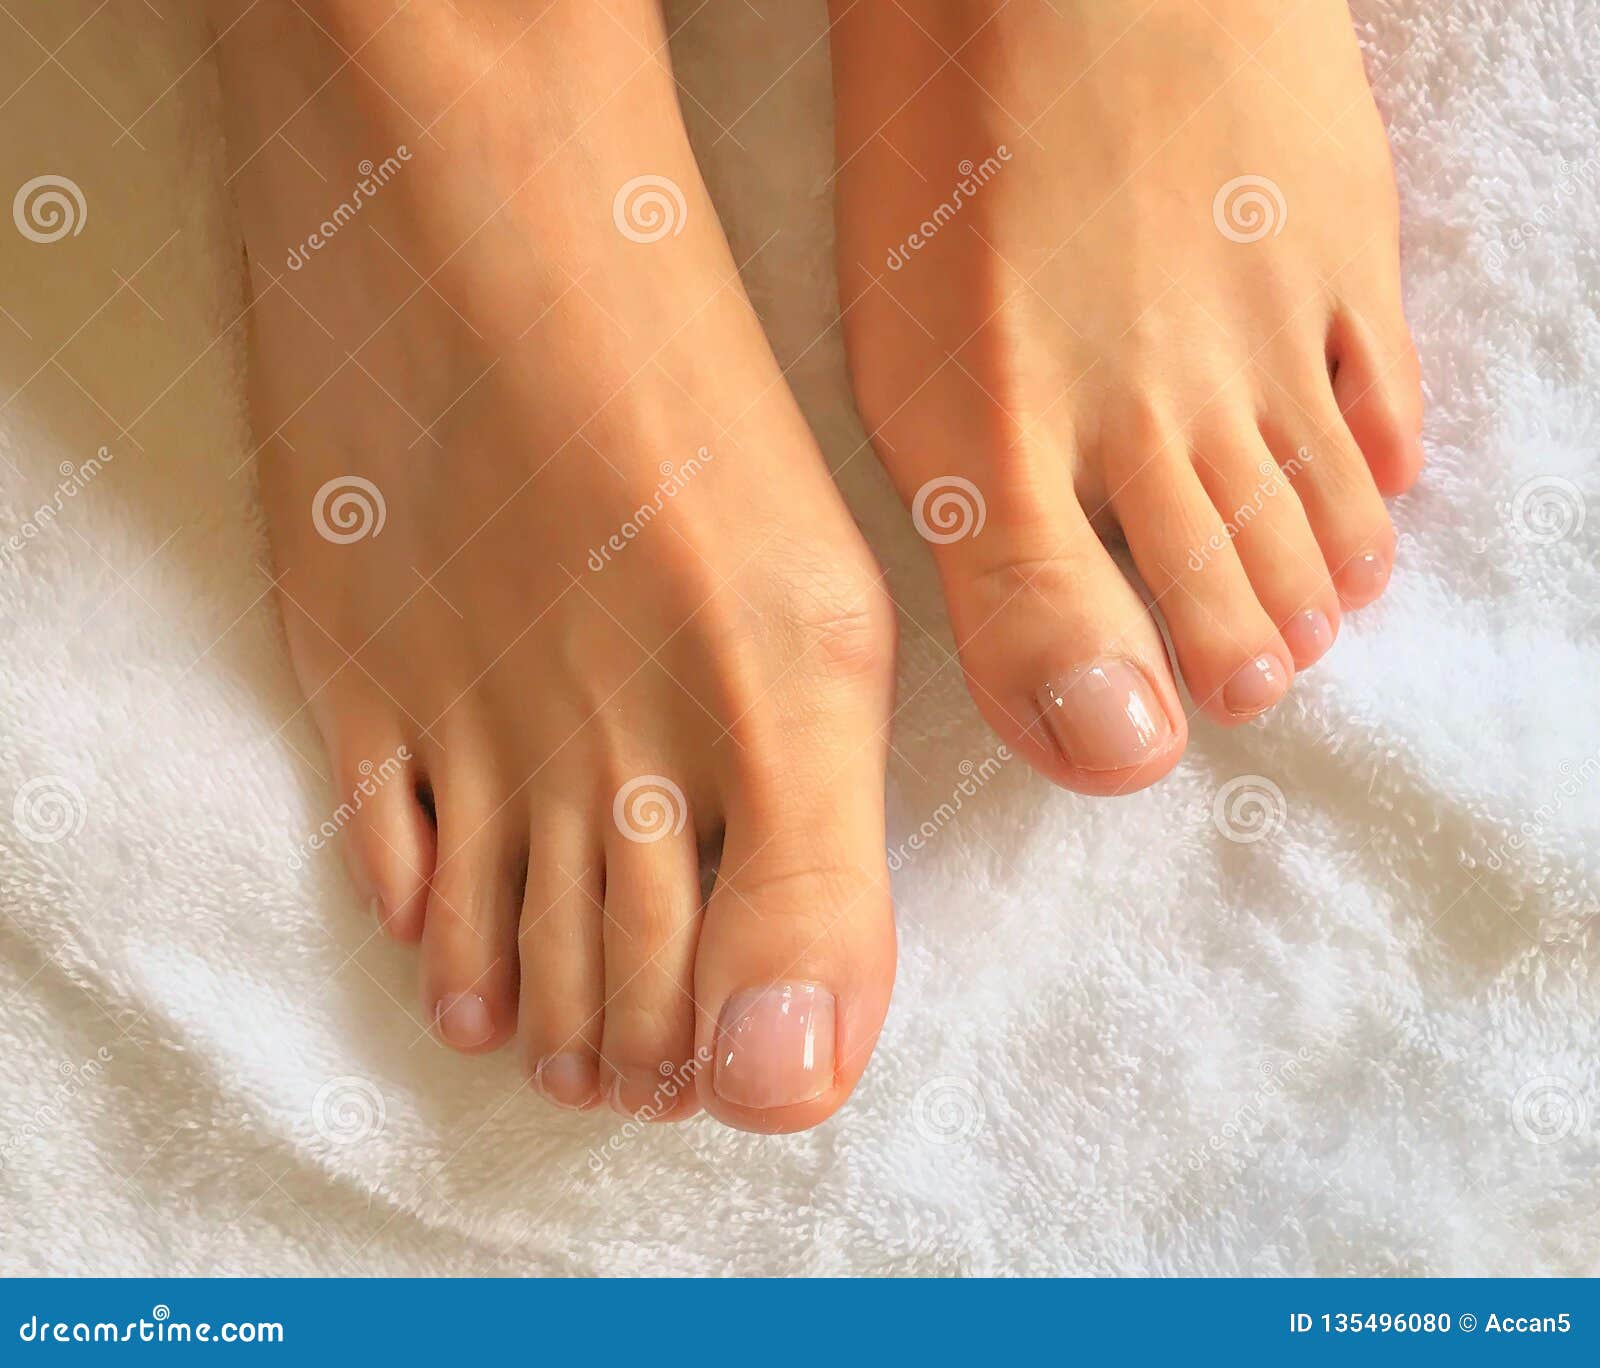 Toes sucking mature Feet: 123,006